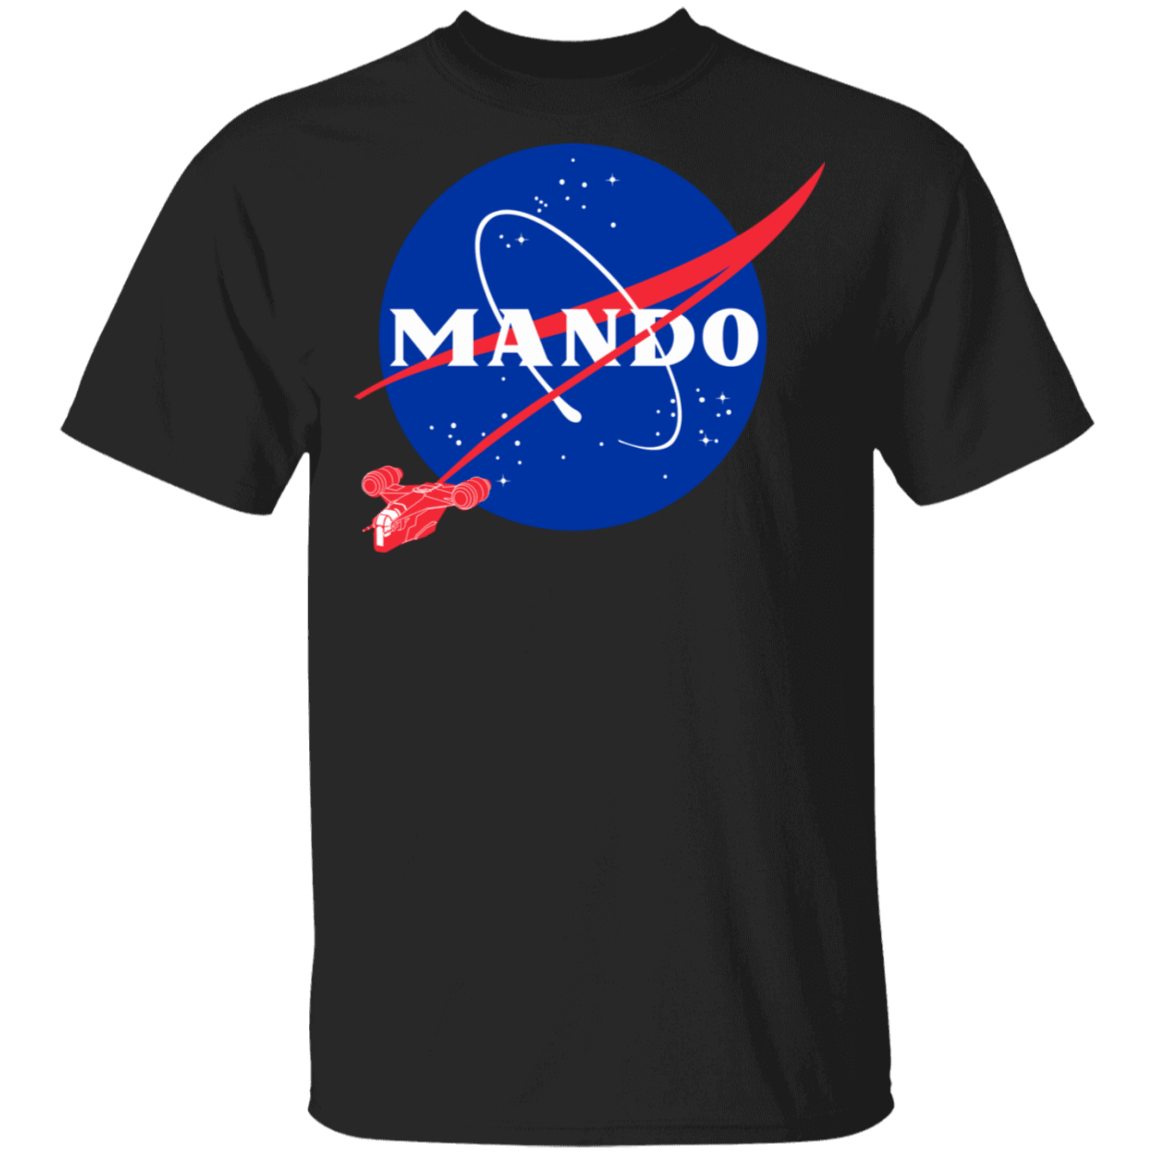 T-Shirts Black / S MANDO T-Shirt